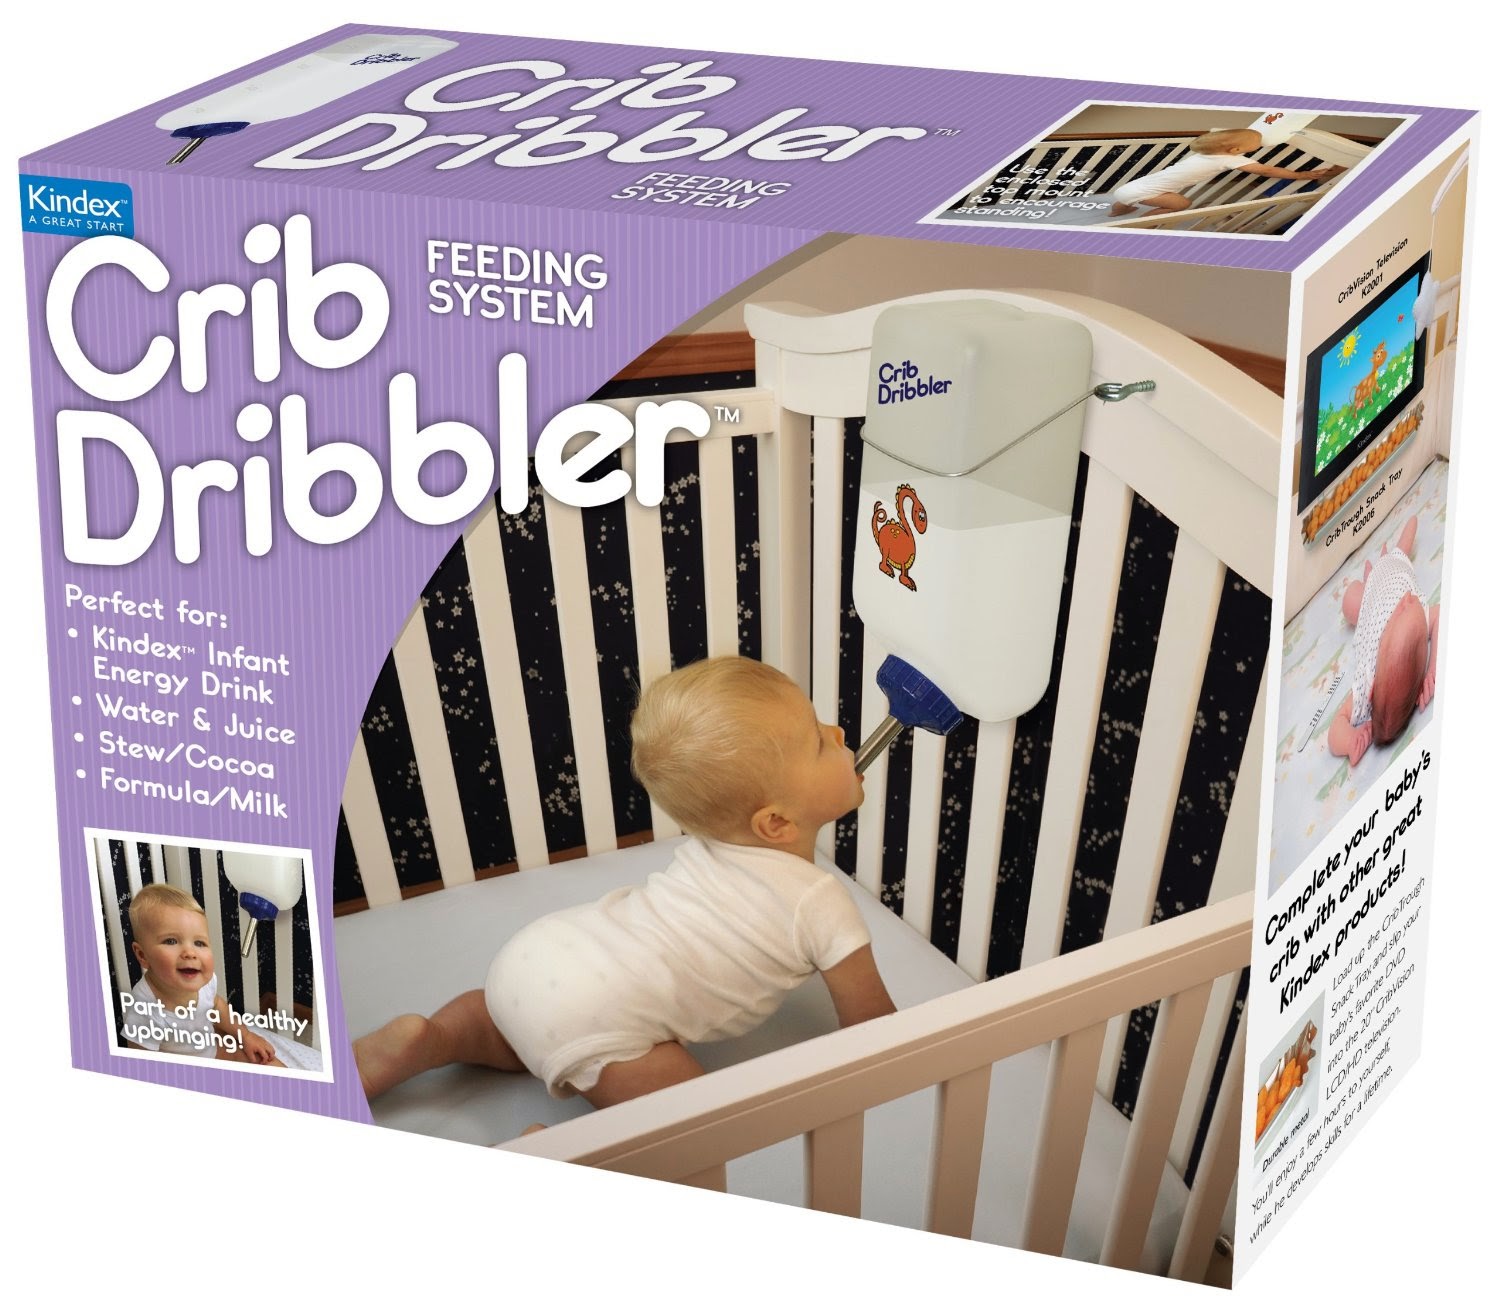 Crib Dribbler